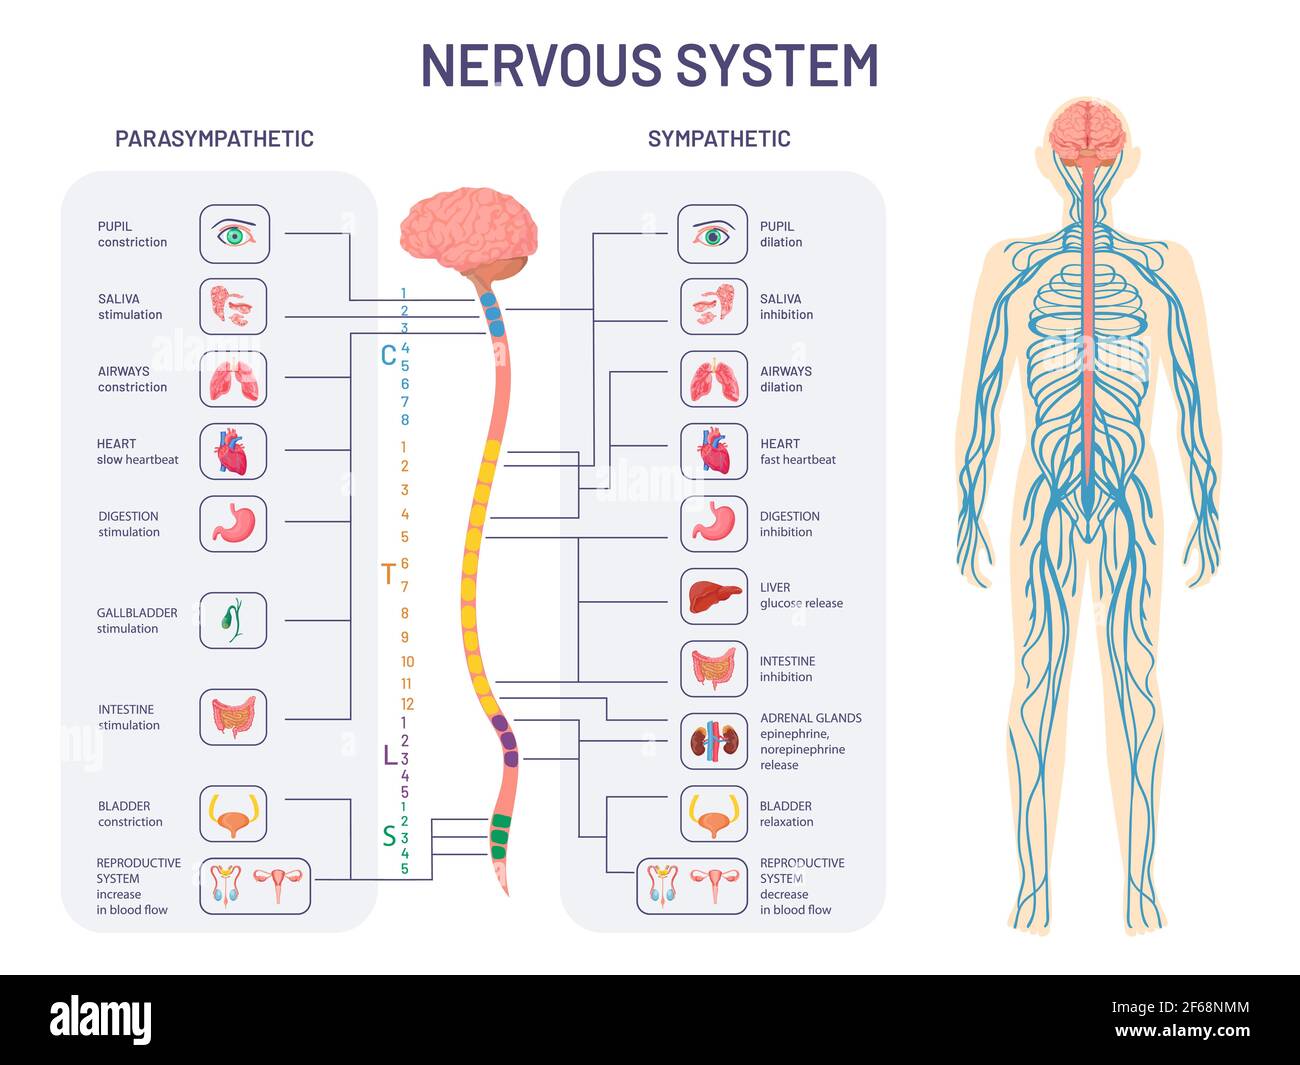 Parasympathetic And Sympathetic Nervous System Differences